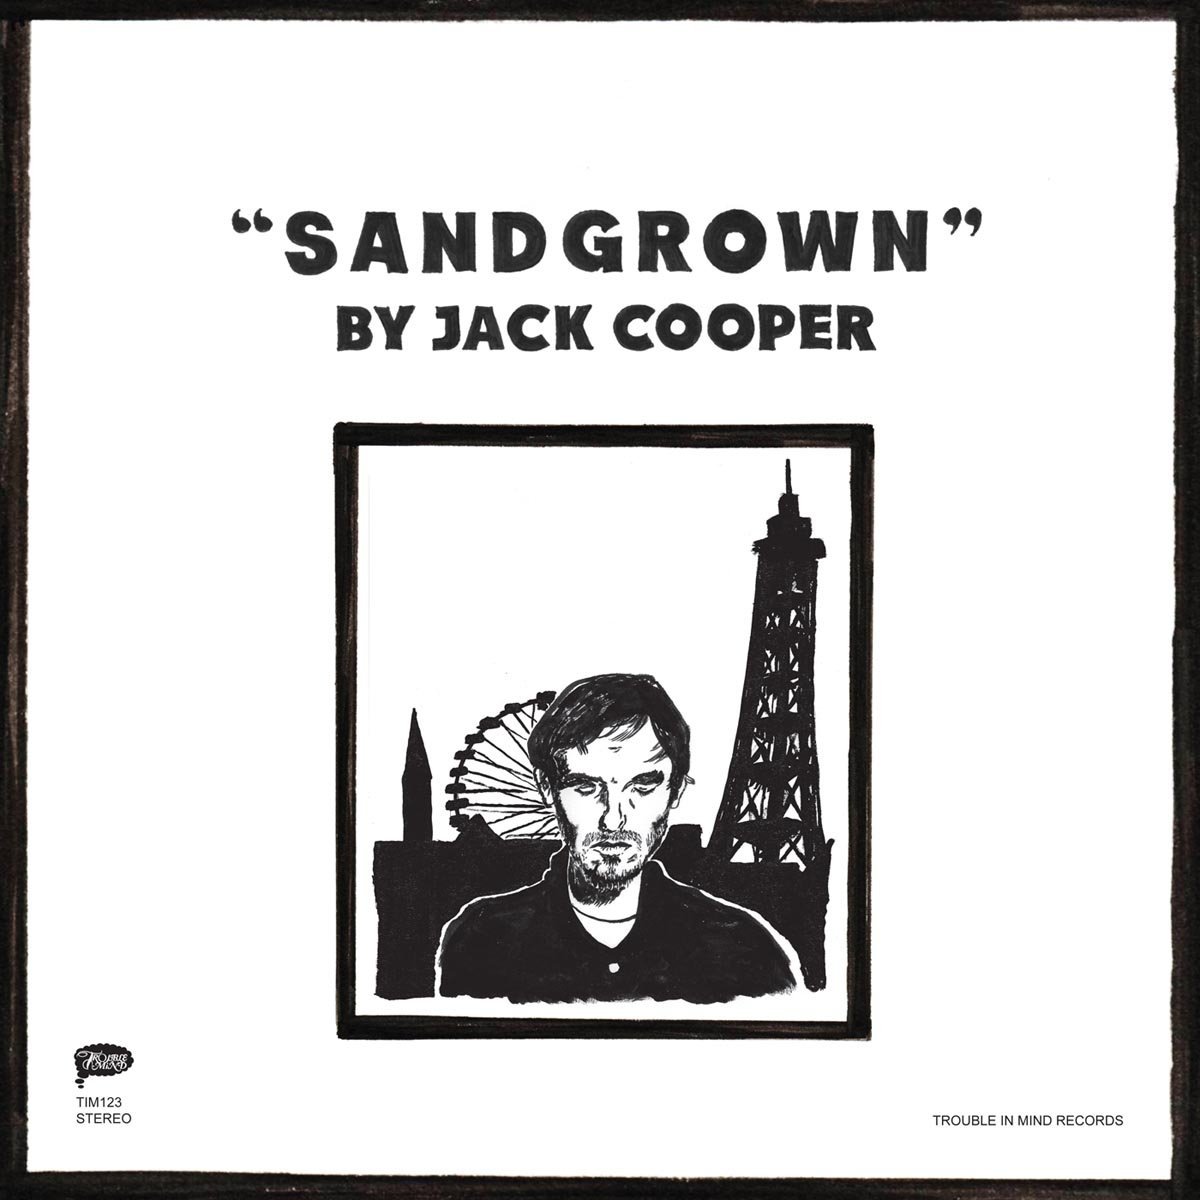 Jack Cooper - Sandgrown (Trouble In Mind)